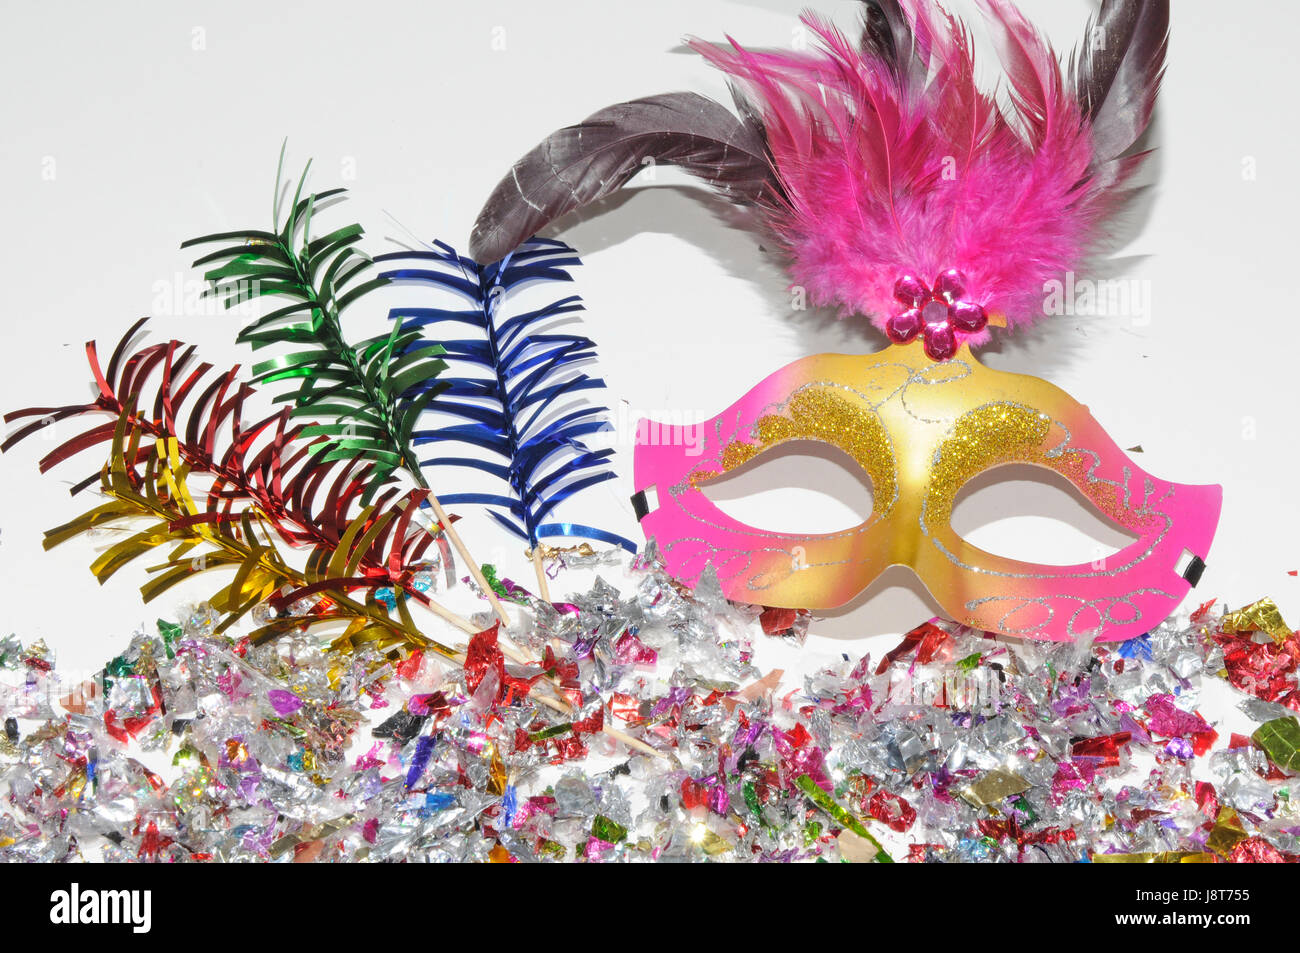 celebrate, reveling, revels, celebrates, mood, carnival, silvester, New Years Stock Photo